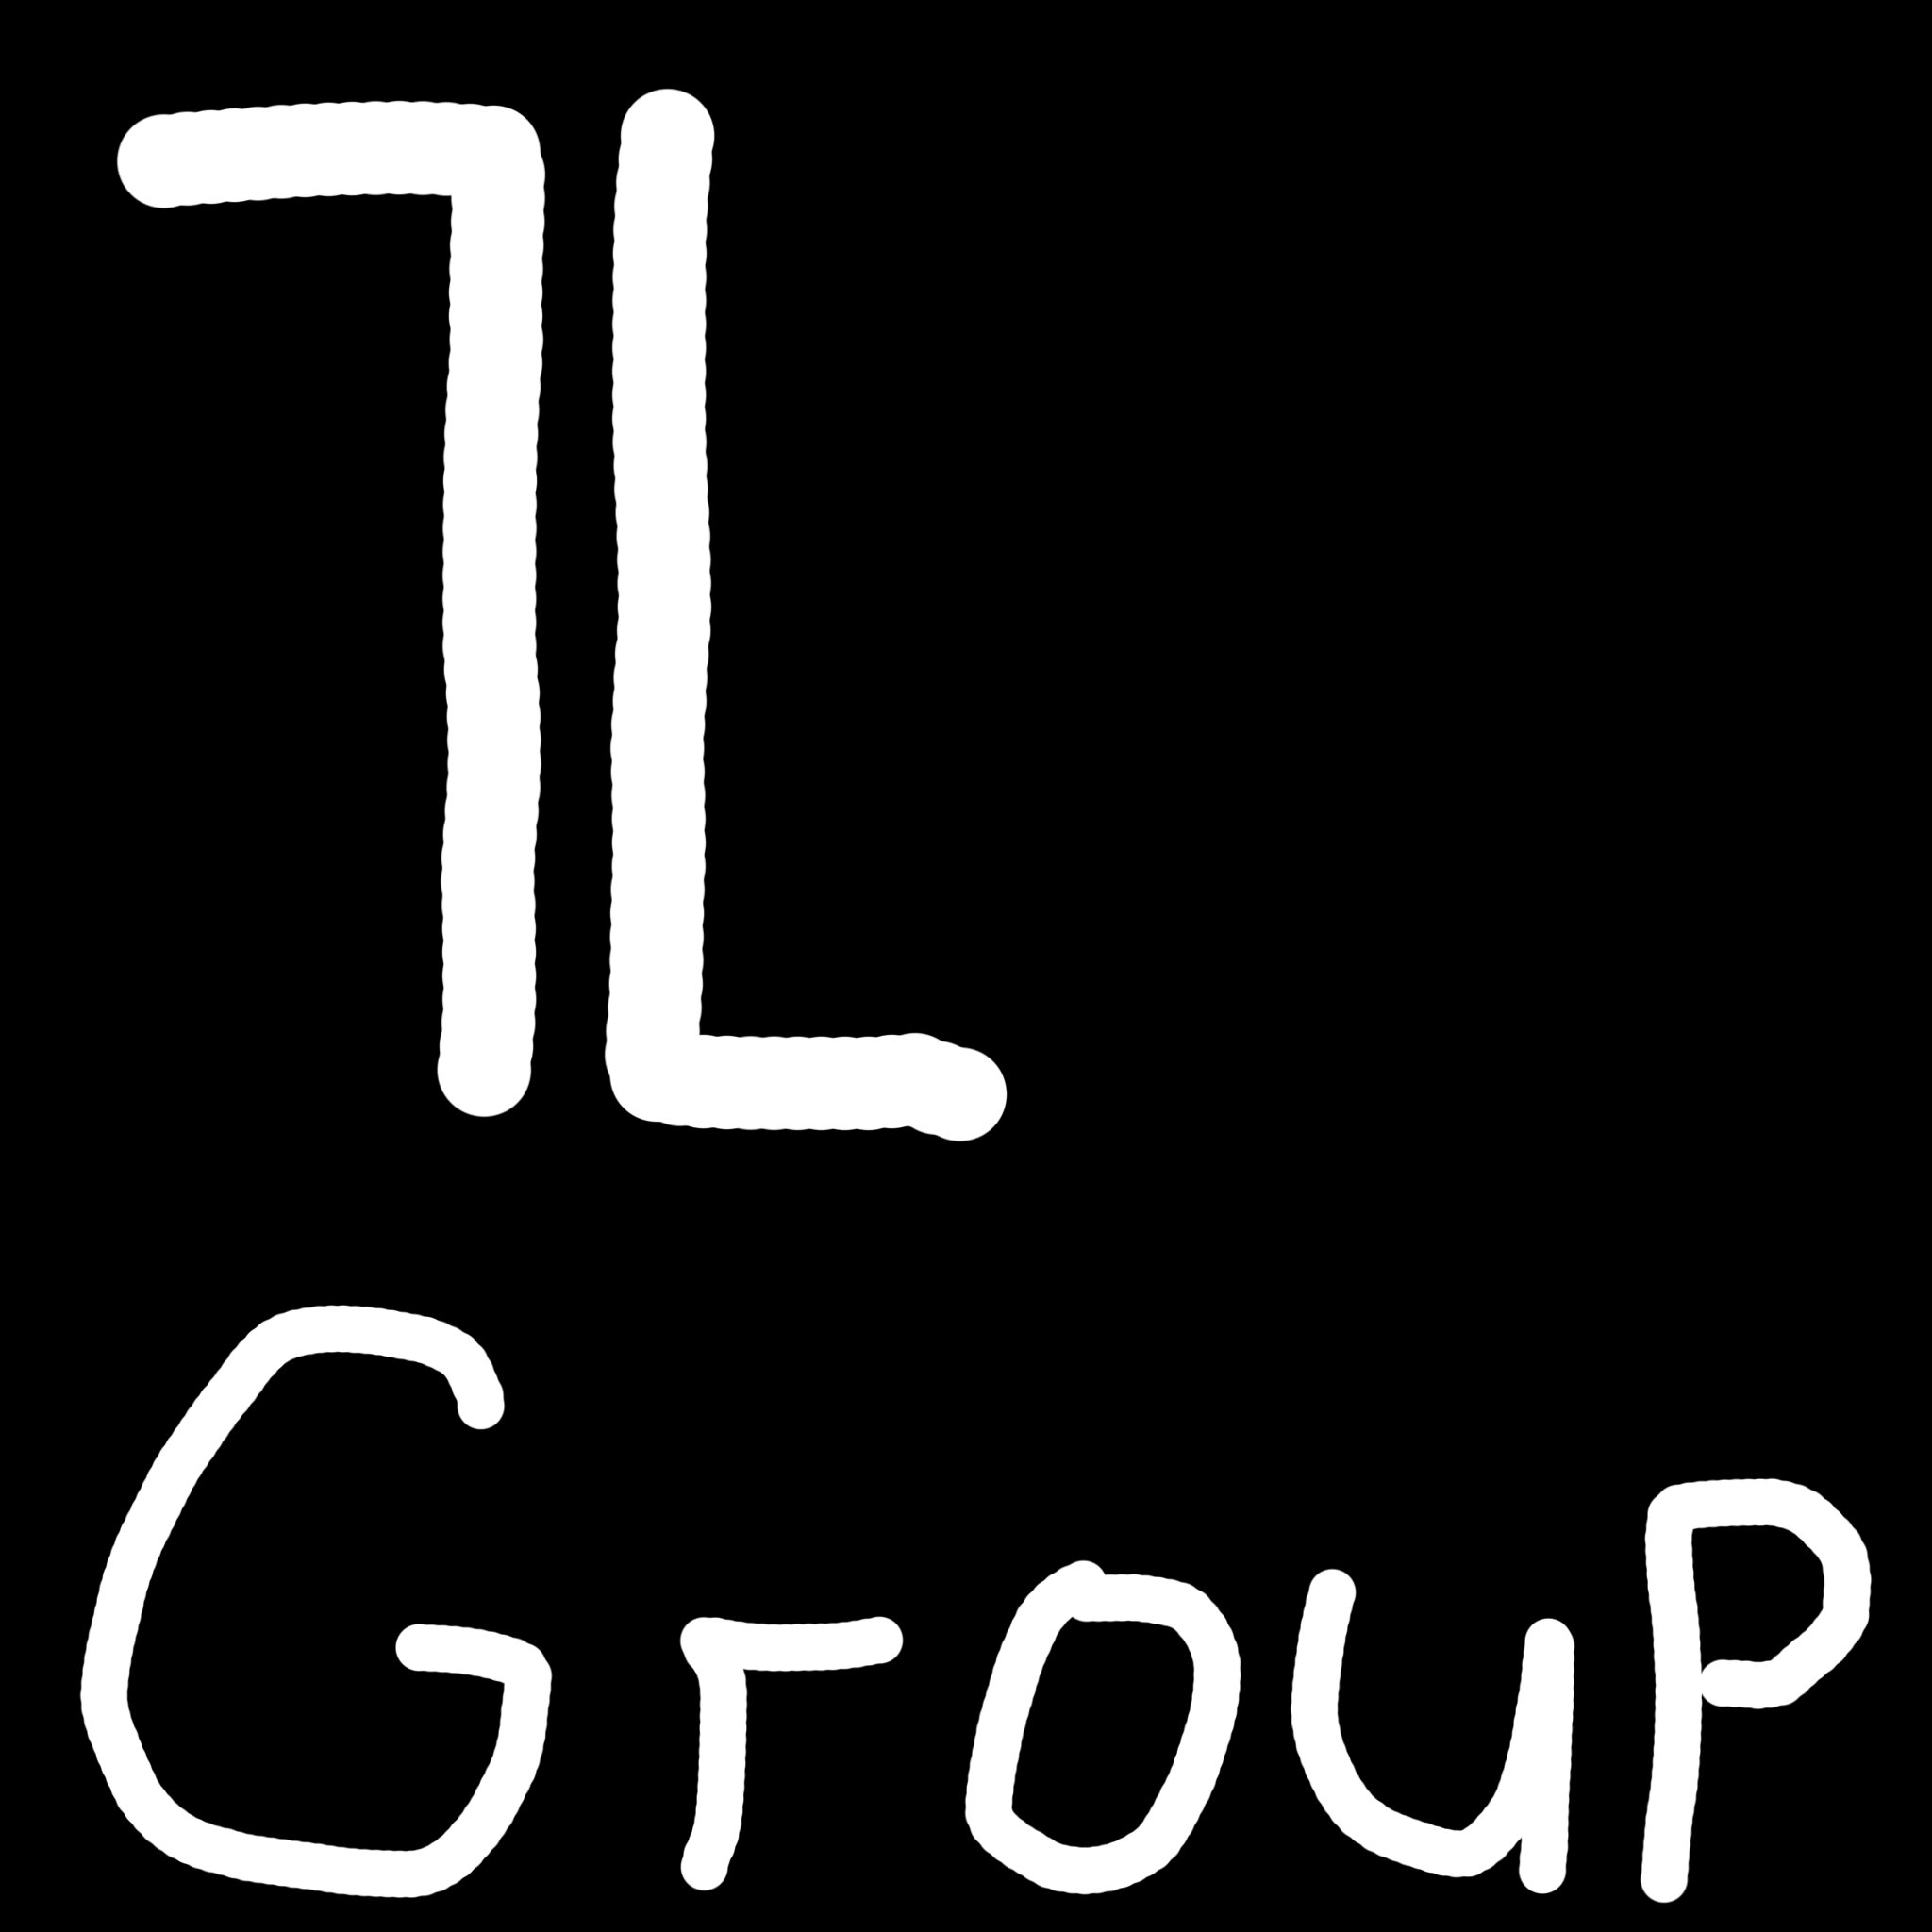 1L Group